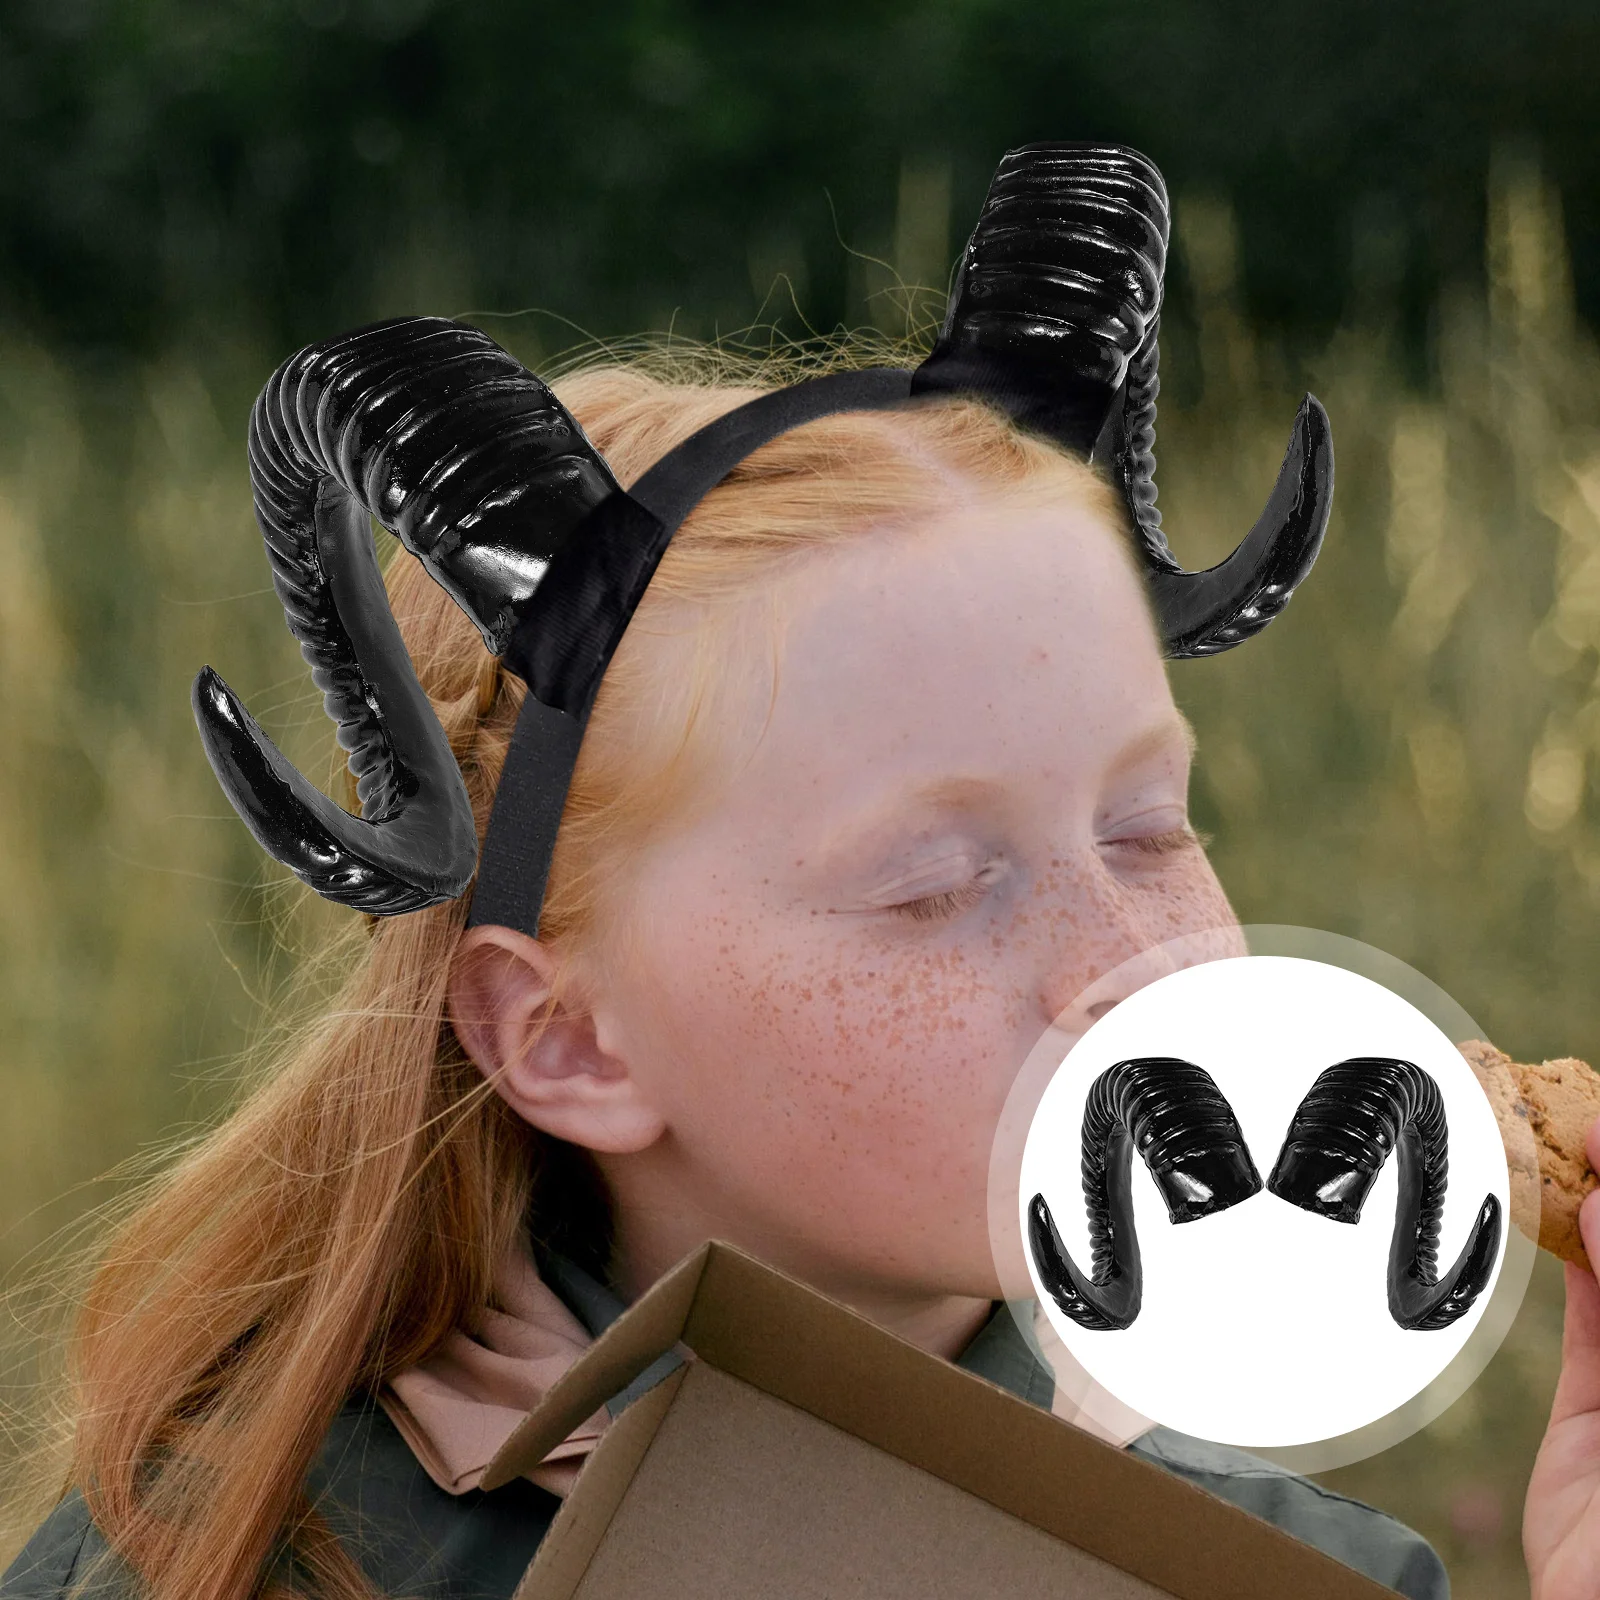 

Sheep Horn Headdress Party Prop Headband Decorative Hair Clips Horns Cosplay Decked Accessories Gothic Halloween